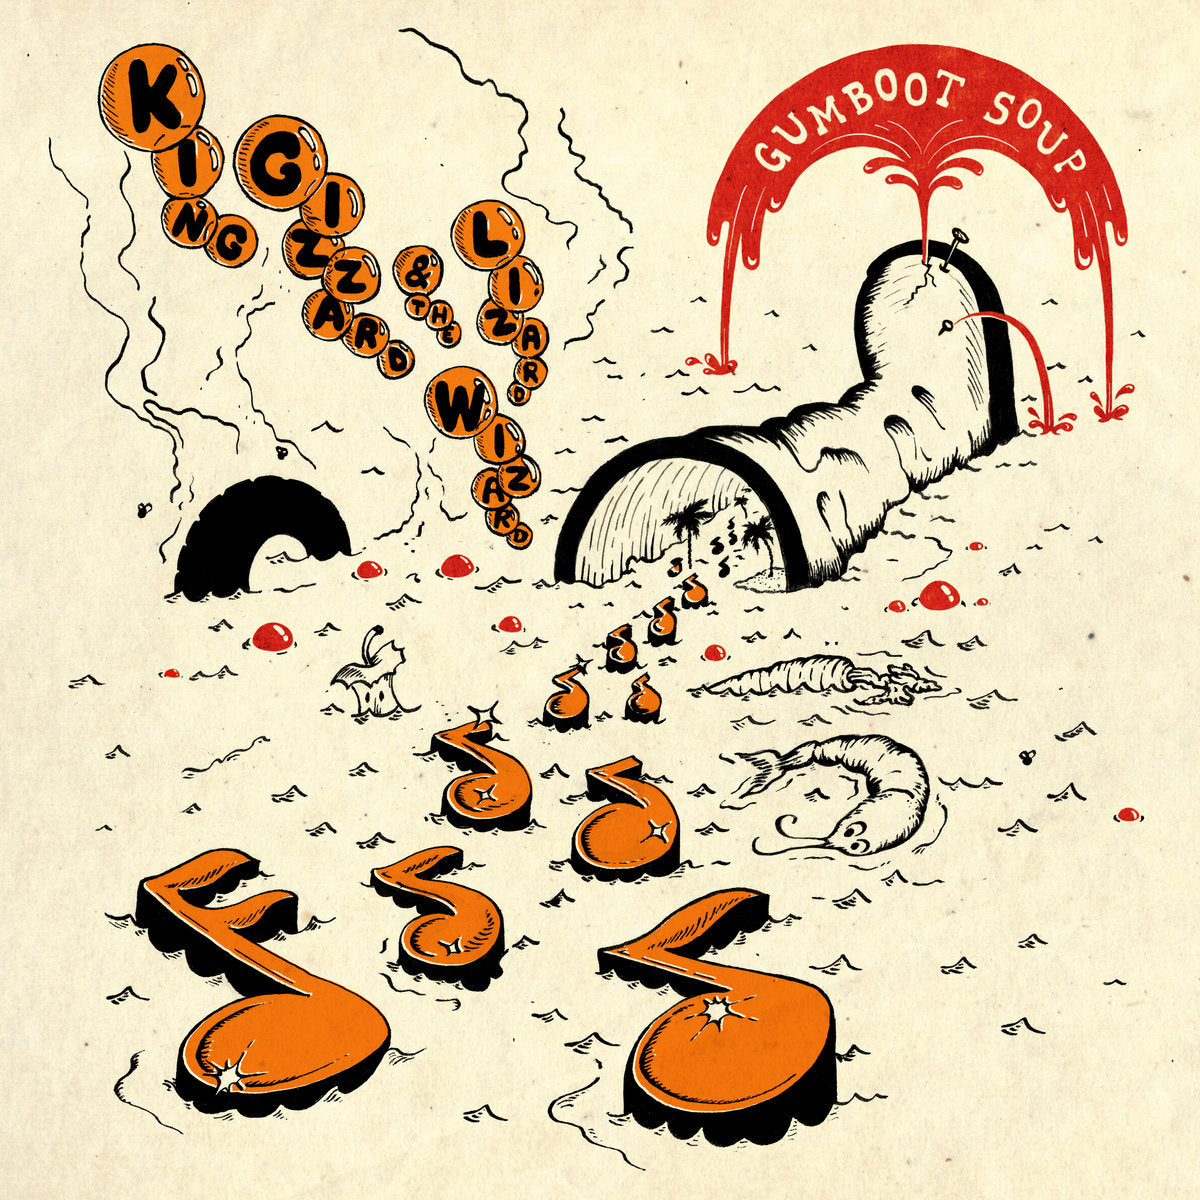 Gumboot Soup LP